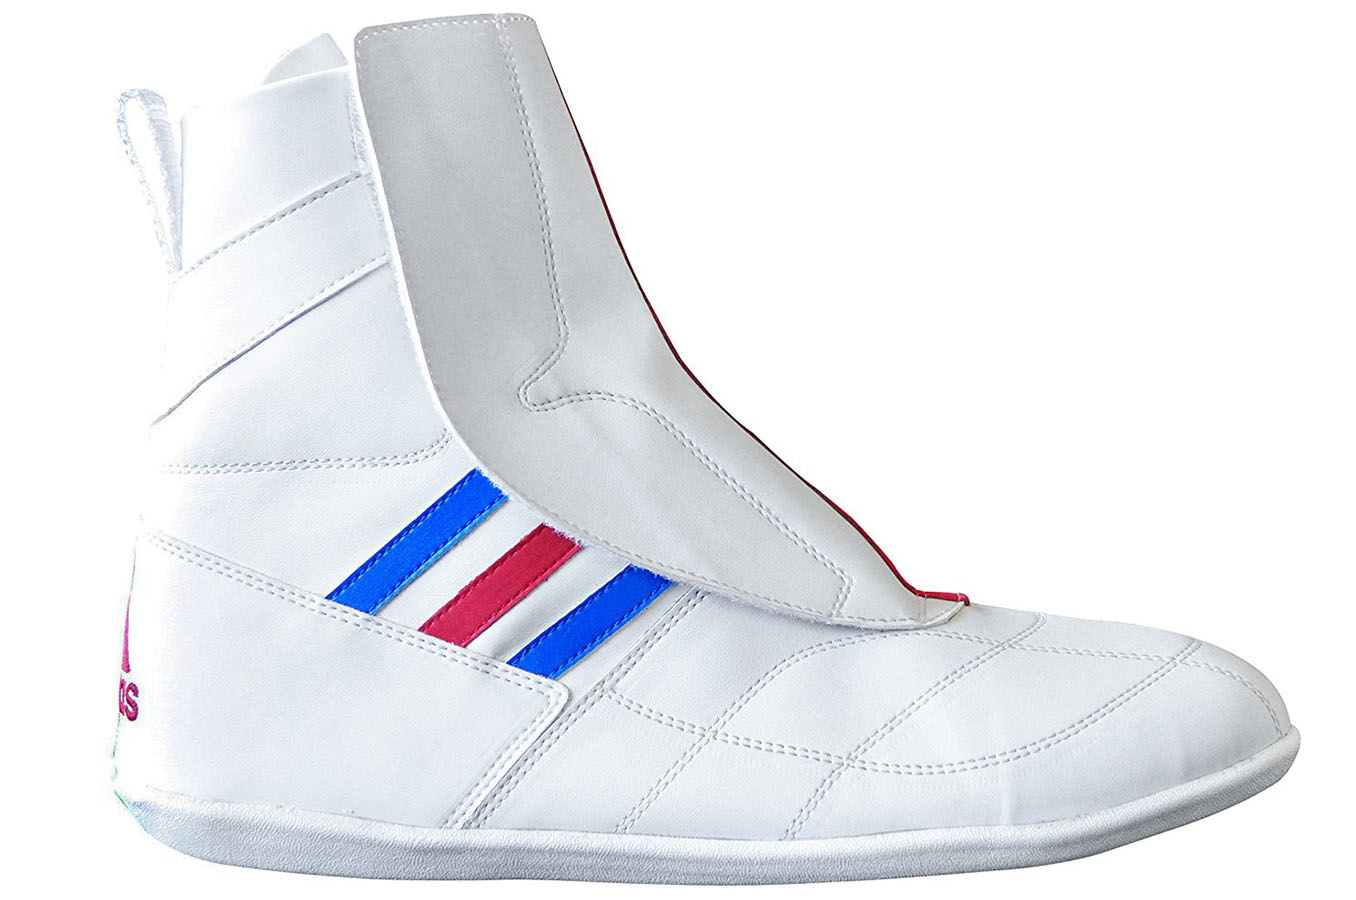 French Boxing Shoes - ADISFB03, Adidas 